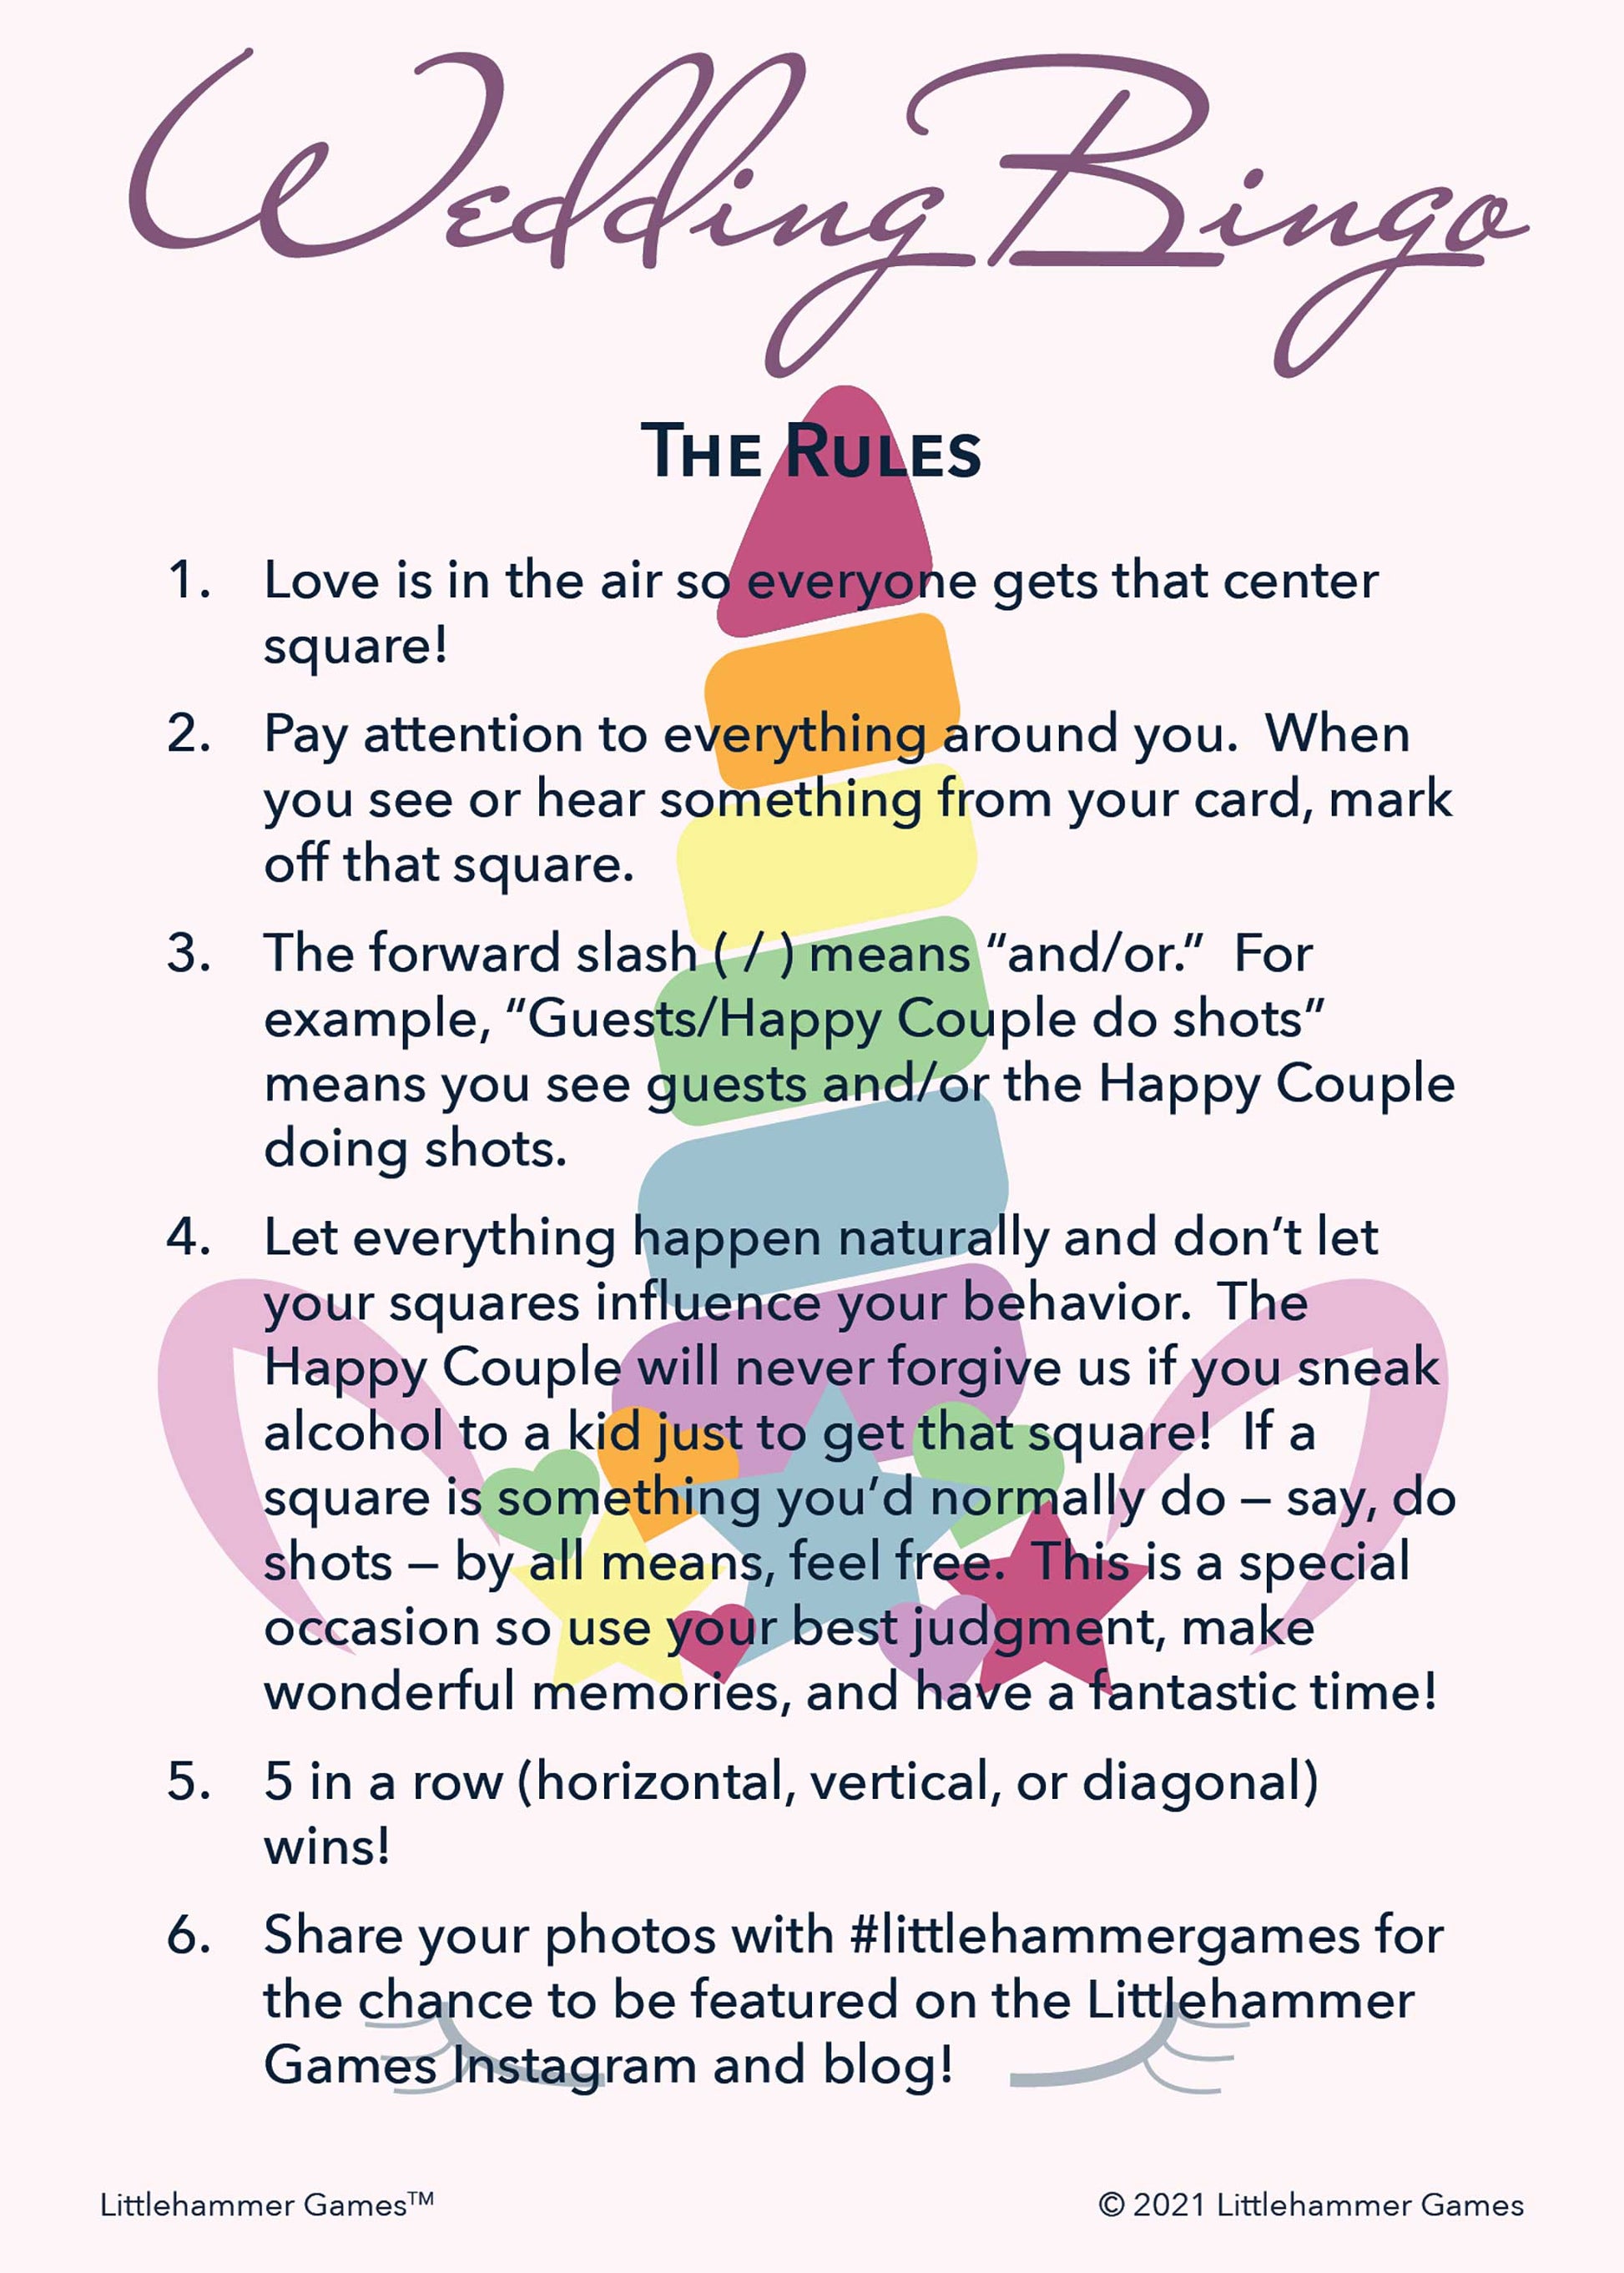 Wedding Bingo rules card on a unicorn background